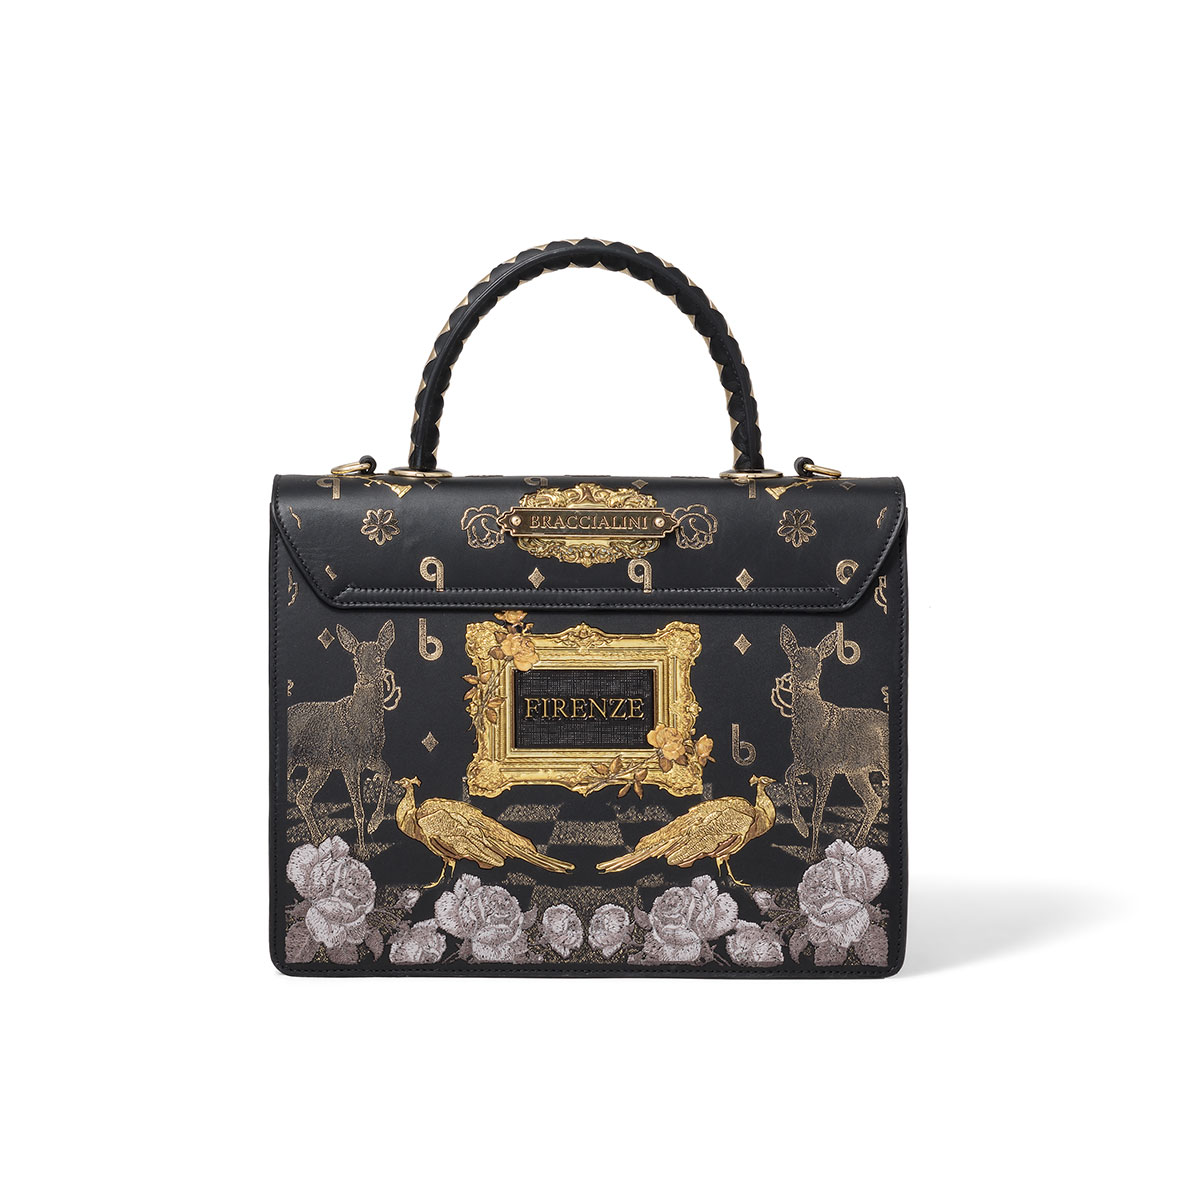 The Black Bag, The Latest Fashion Bag, - China Bags and Ms Shoulder Bag  price